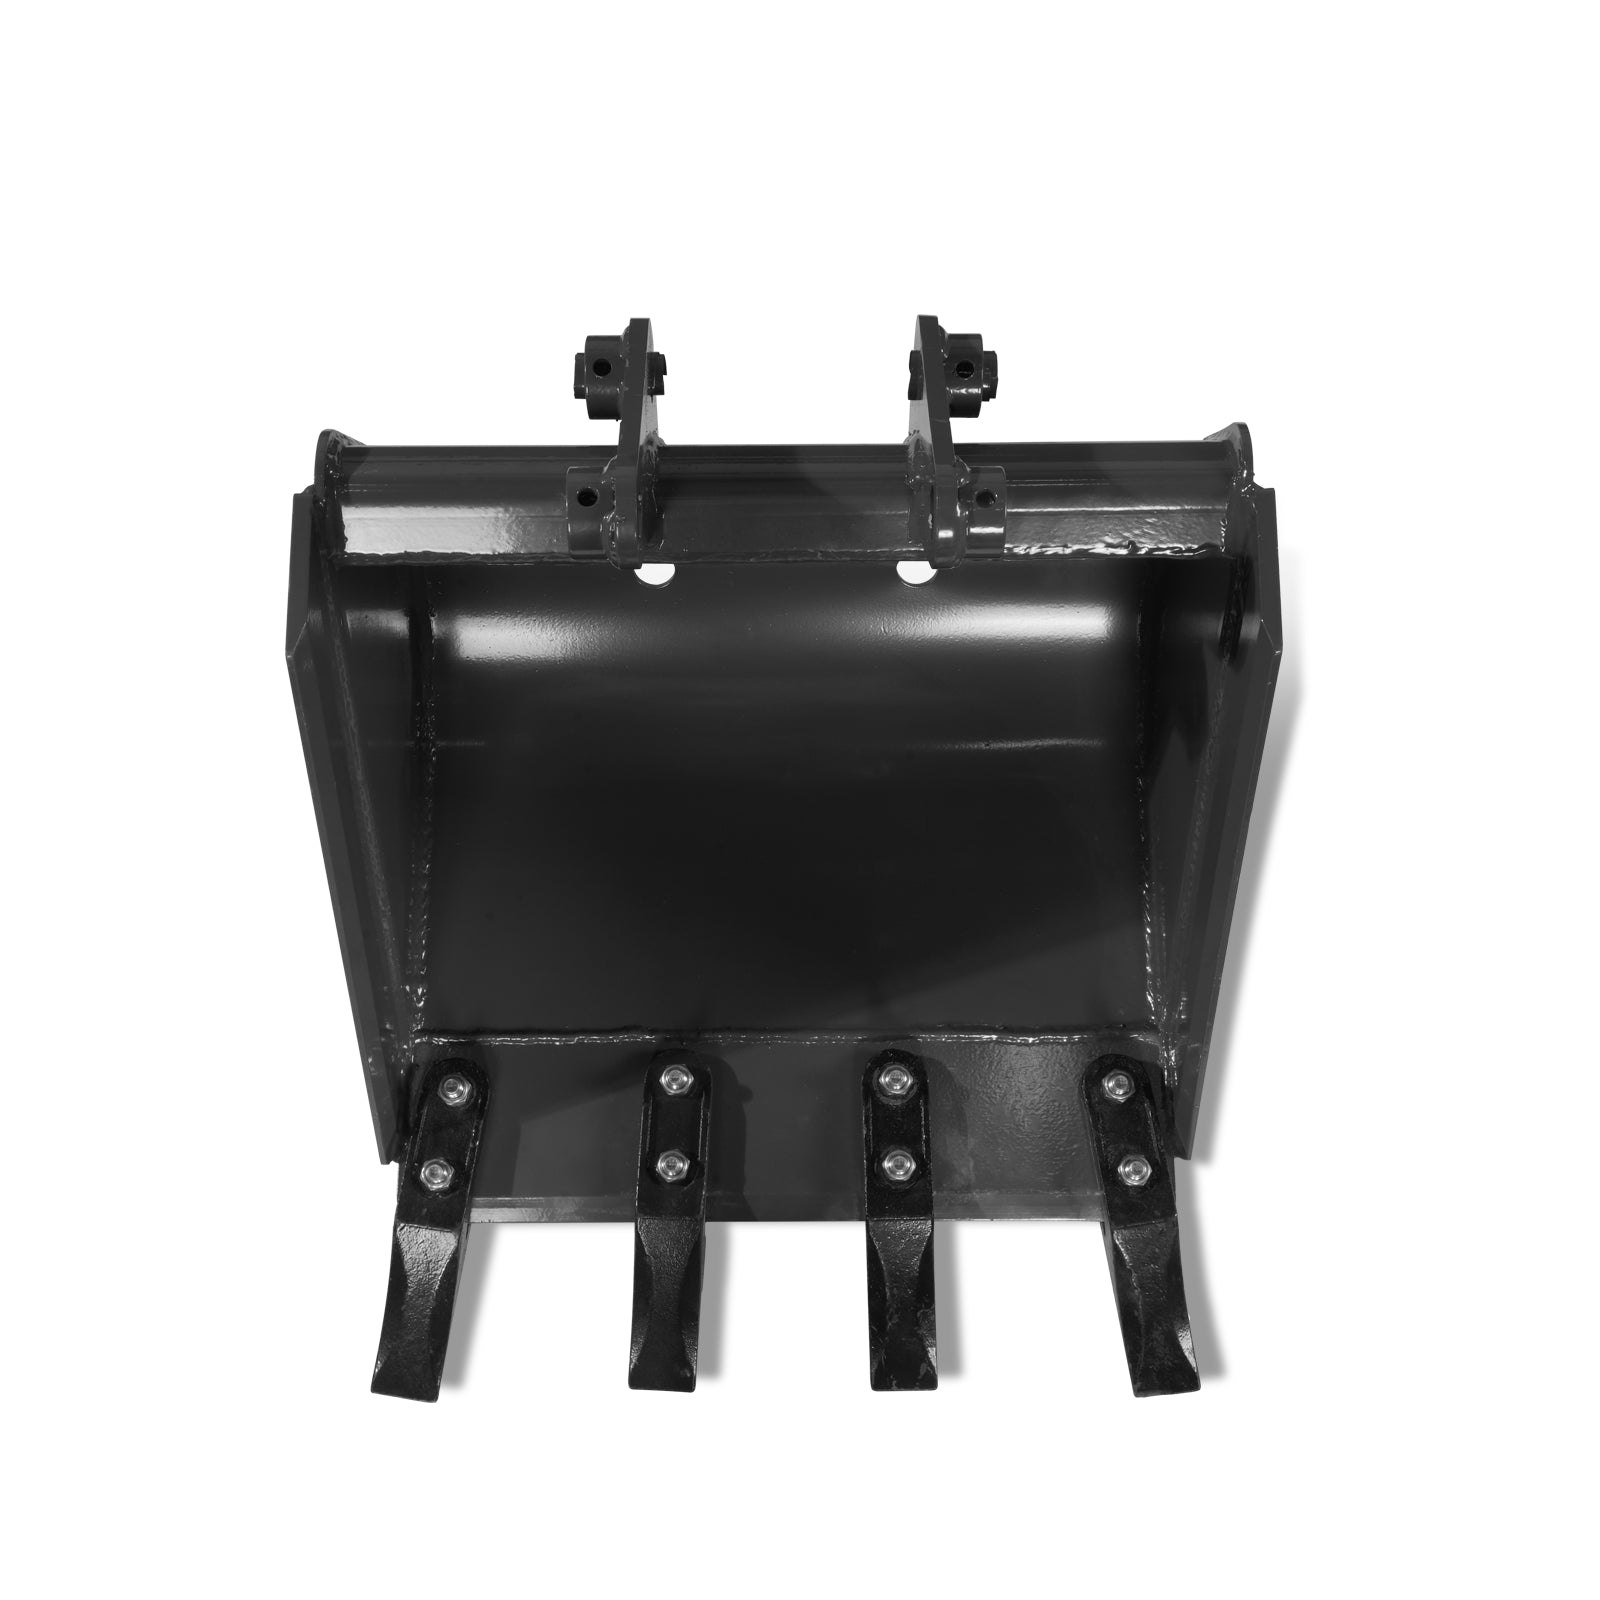 18in Wide Backhoe Bucket, 4-Carbon Steel Teeth, (for SKU: 150162; 150163; 150164）